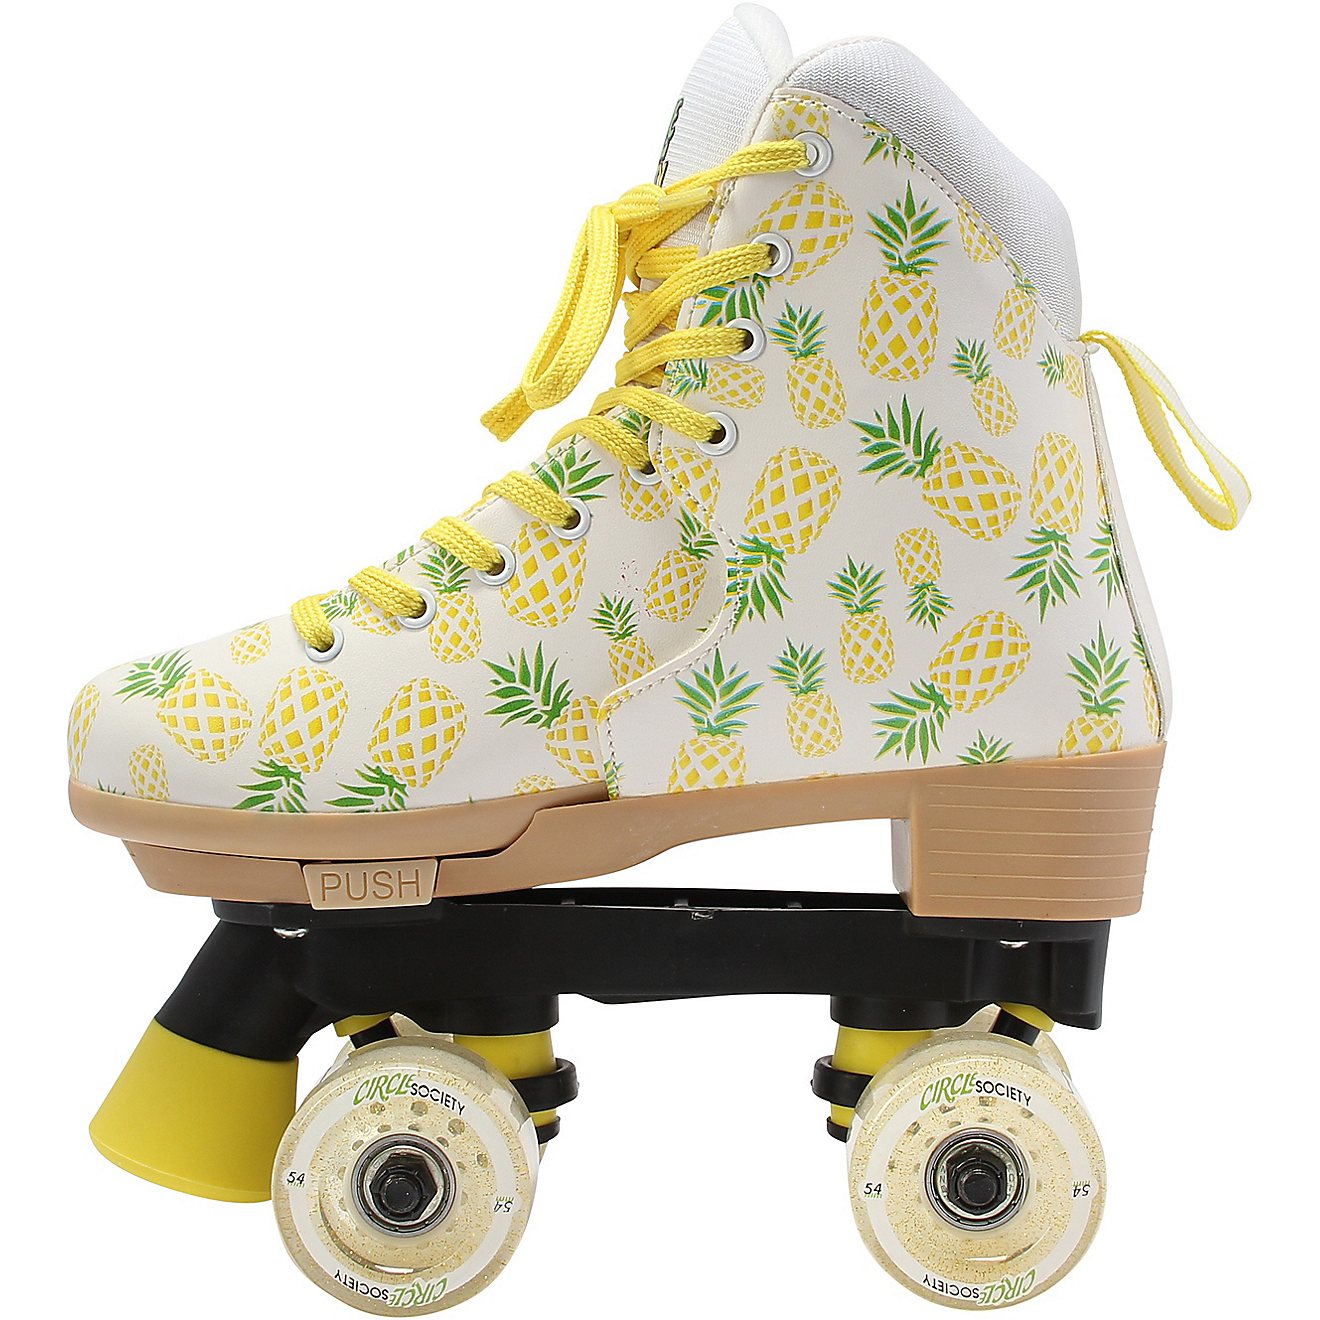 Circle Society Girls' Craze Adjustable Roller Skates                                                                             - view number 3